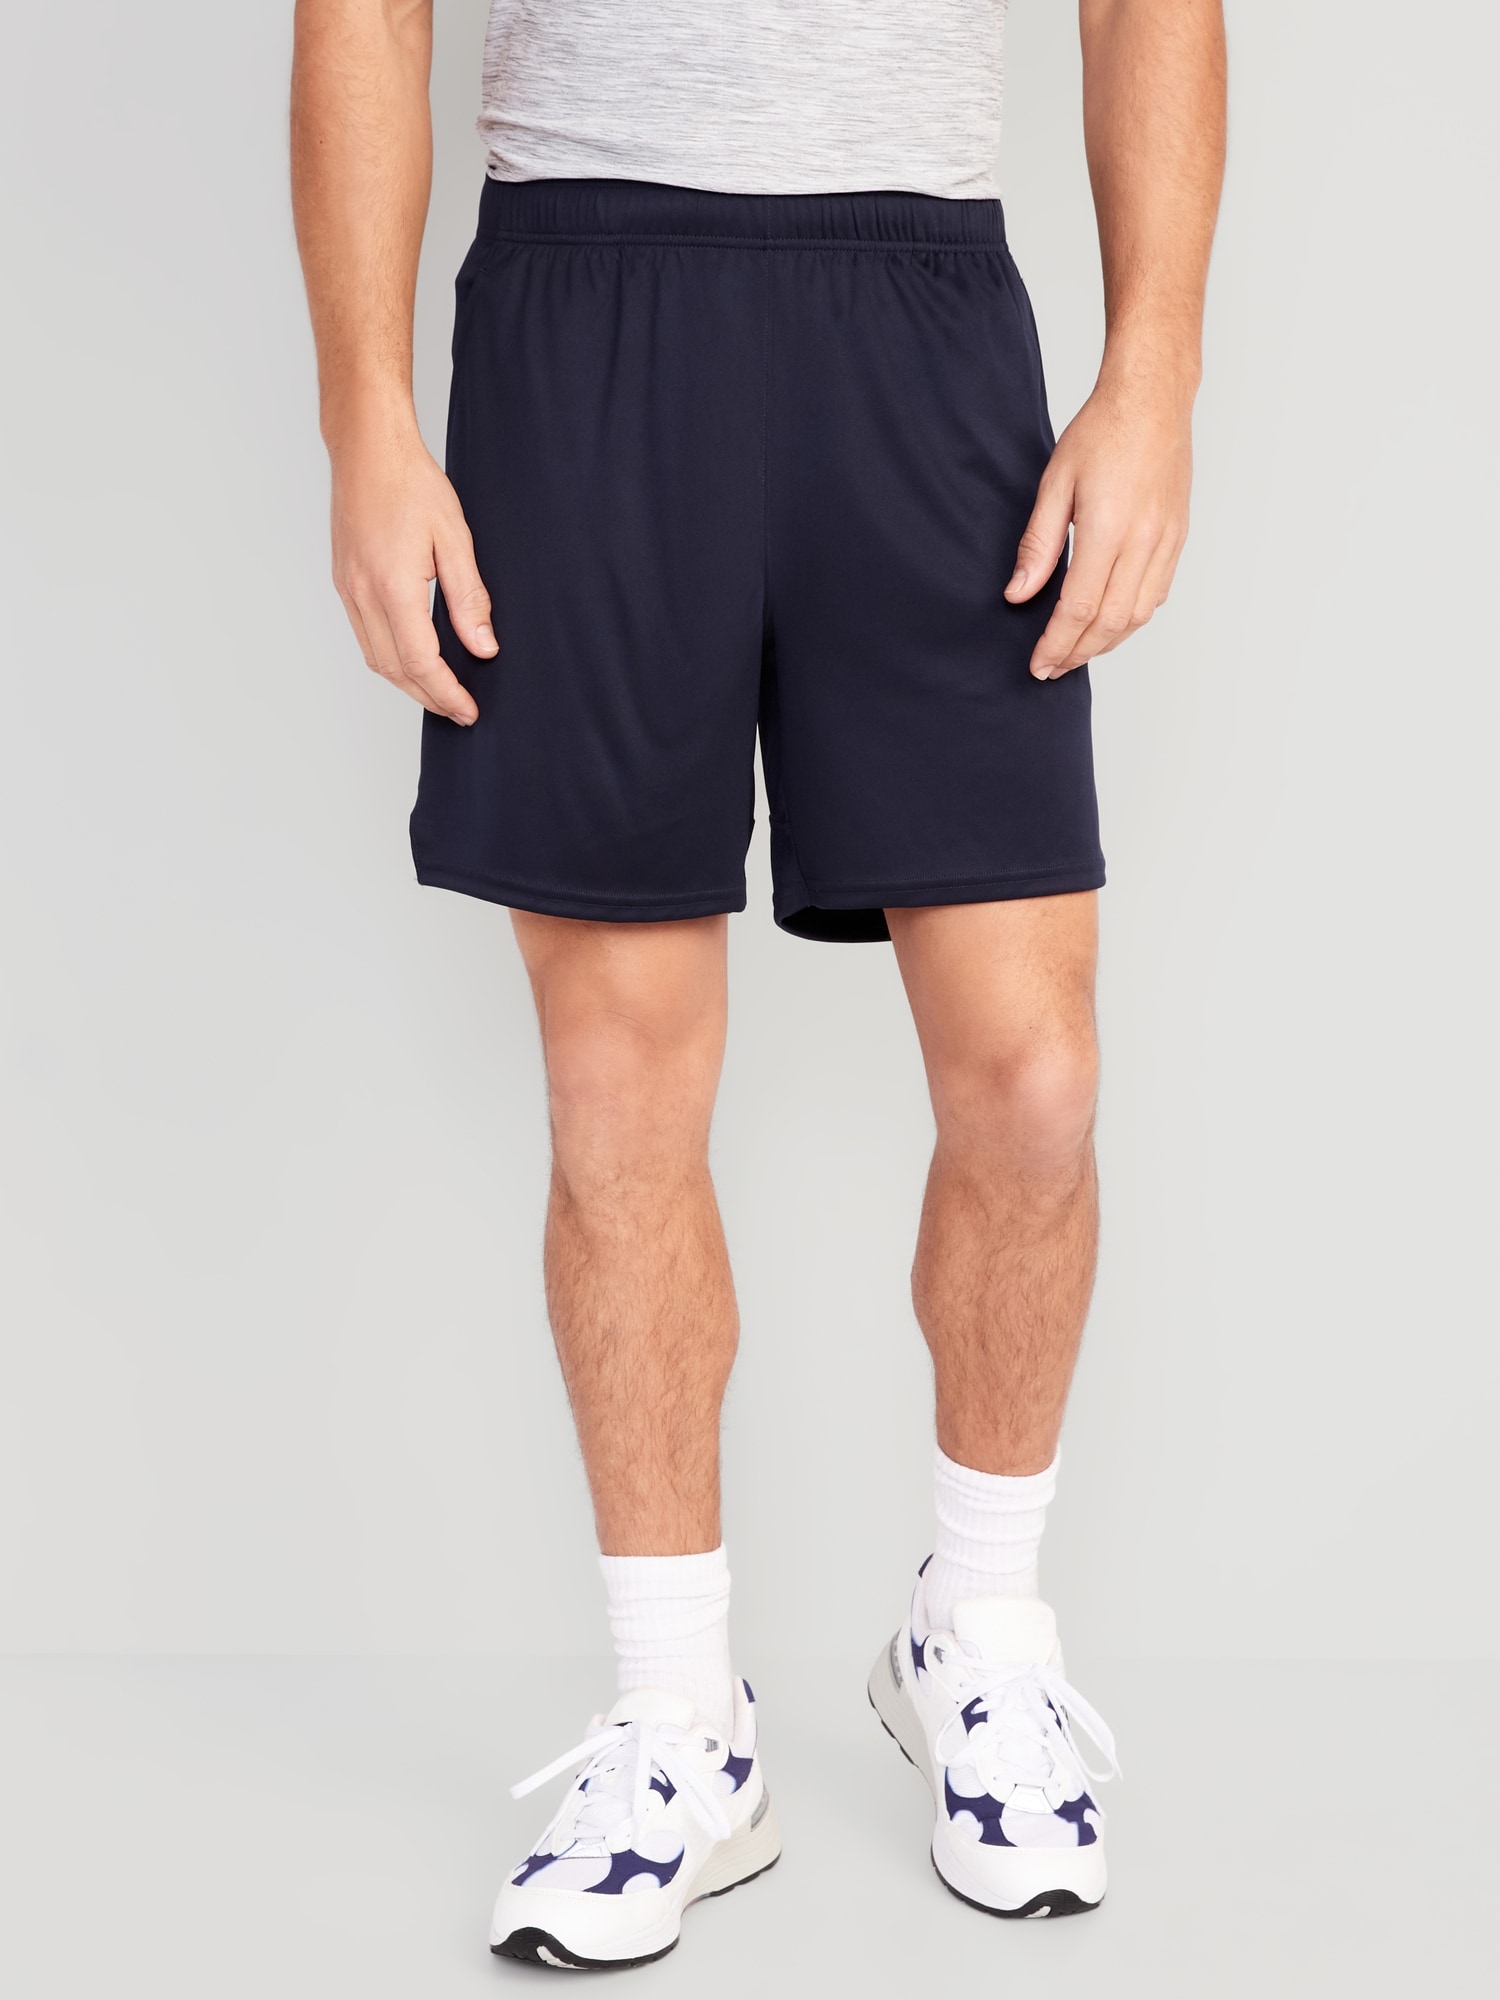 Go-Dry Mesh Basketball Shorts for Men -- 7-inch inseam | Old Navy